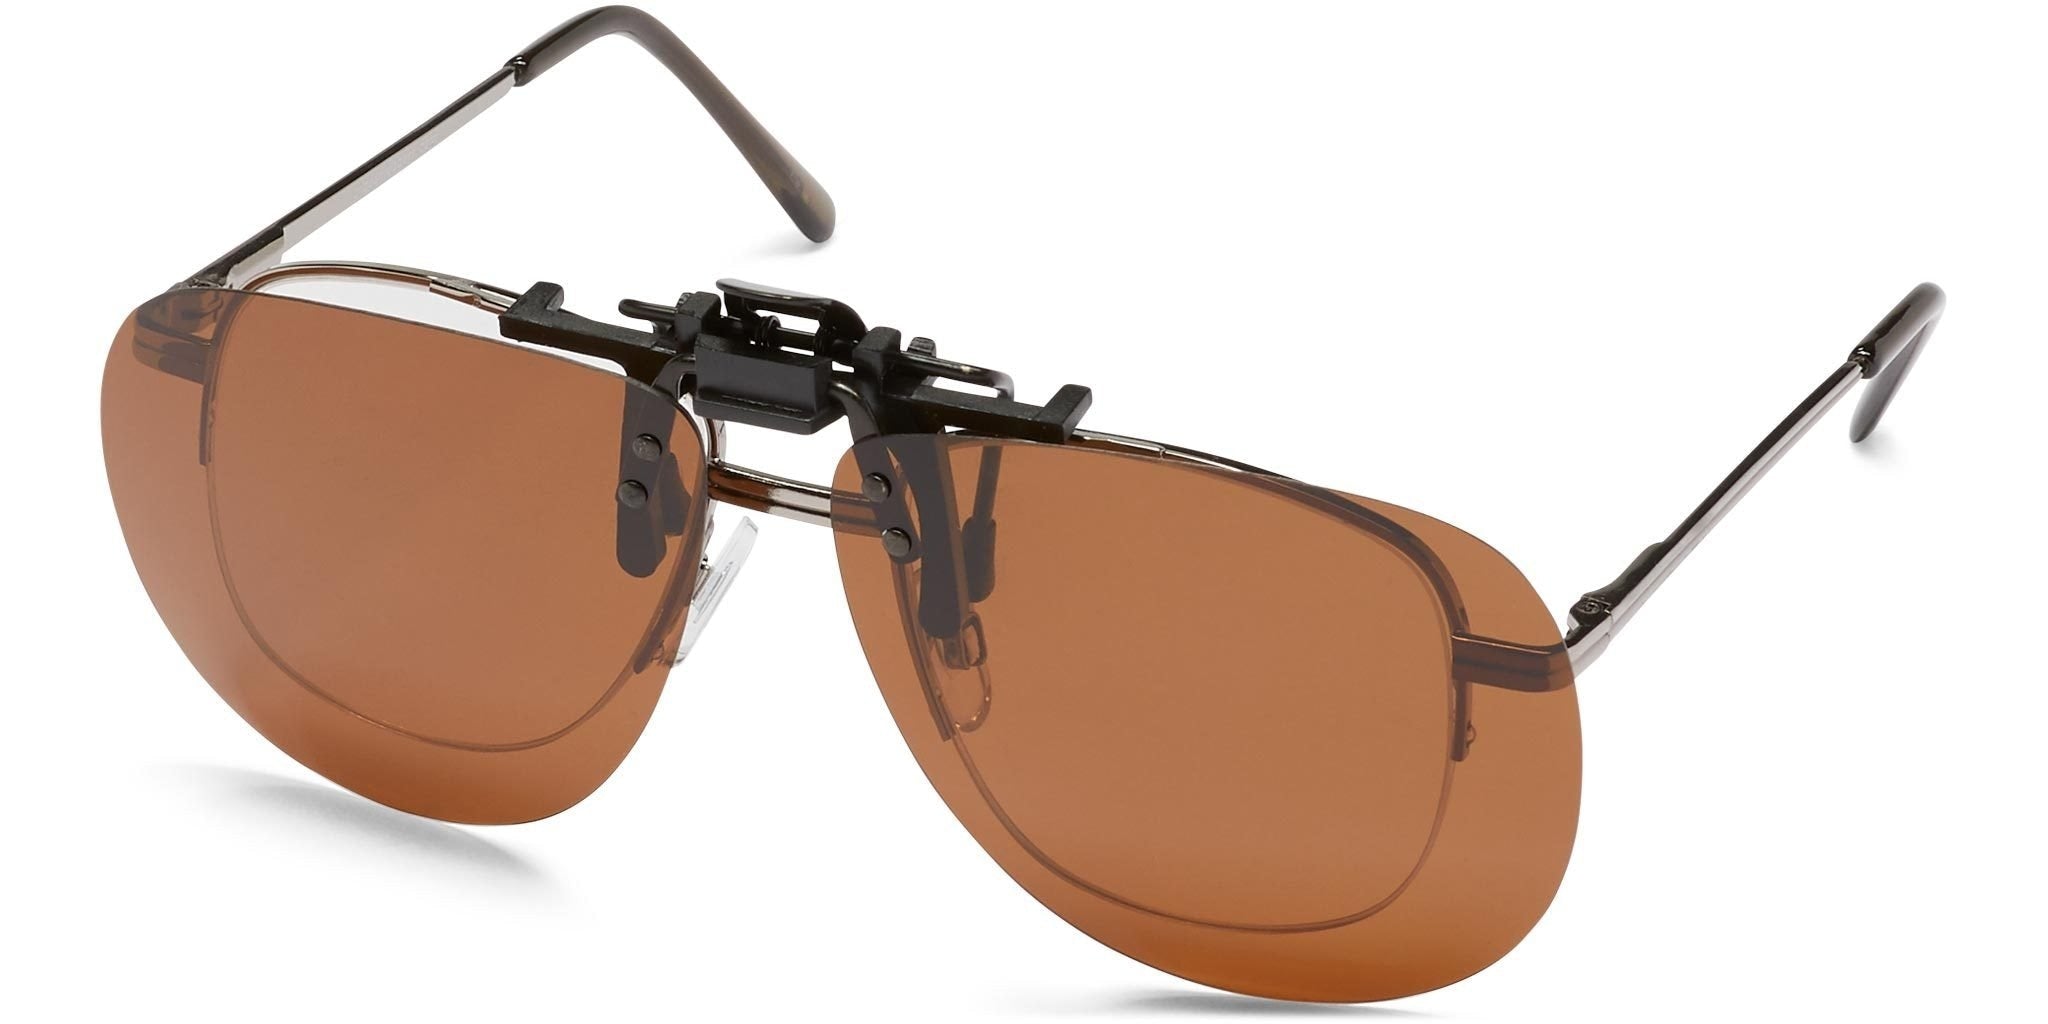 Emblem Eyewear Polarized Full Mirror Aviator Sunglasses